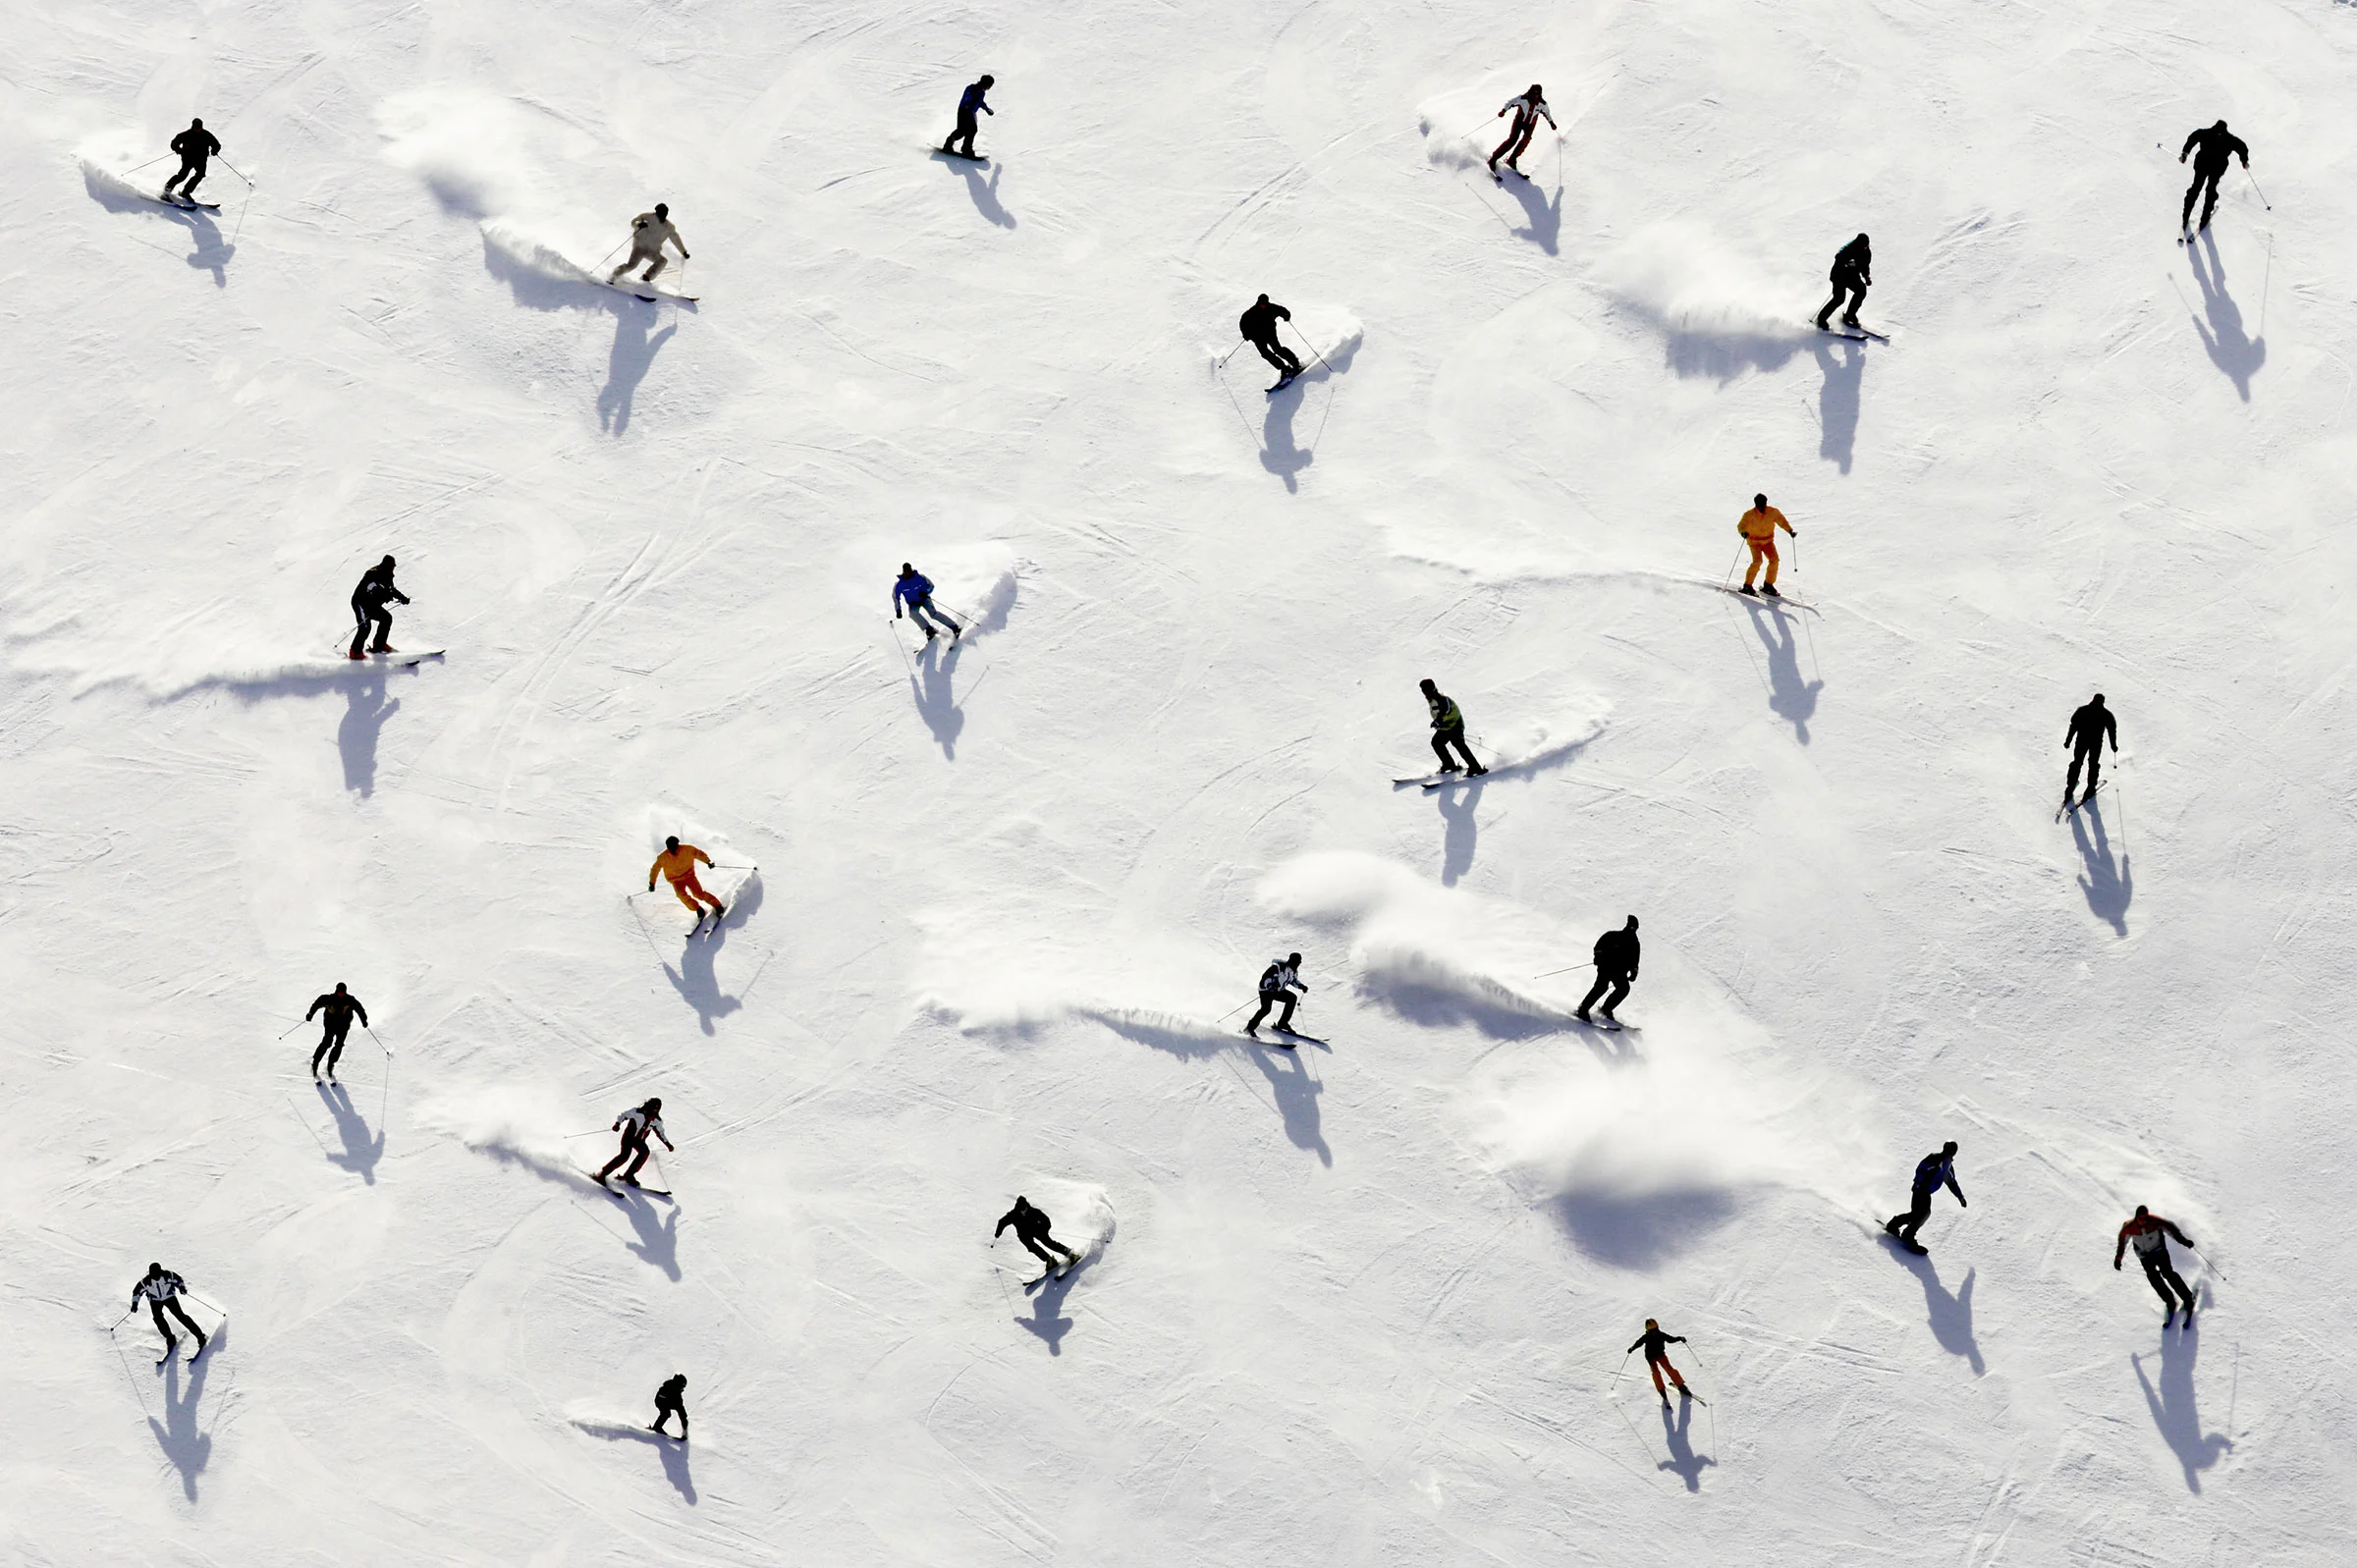 Skiing Peak Accident: Is Skiing Peak Safe for People?